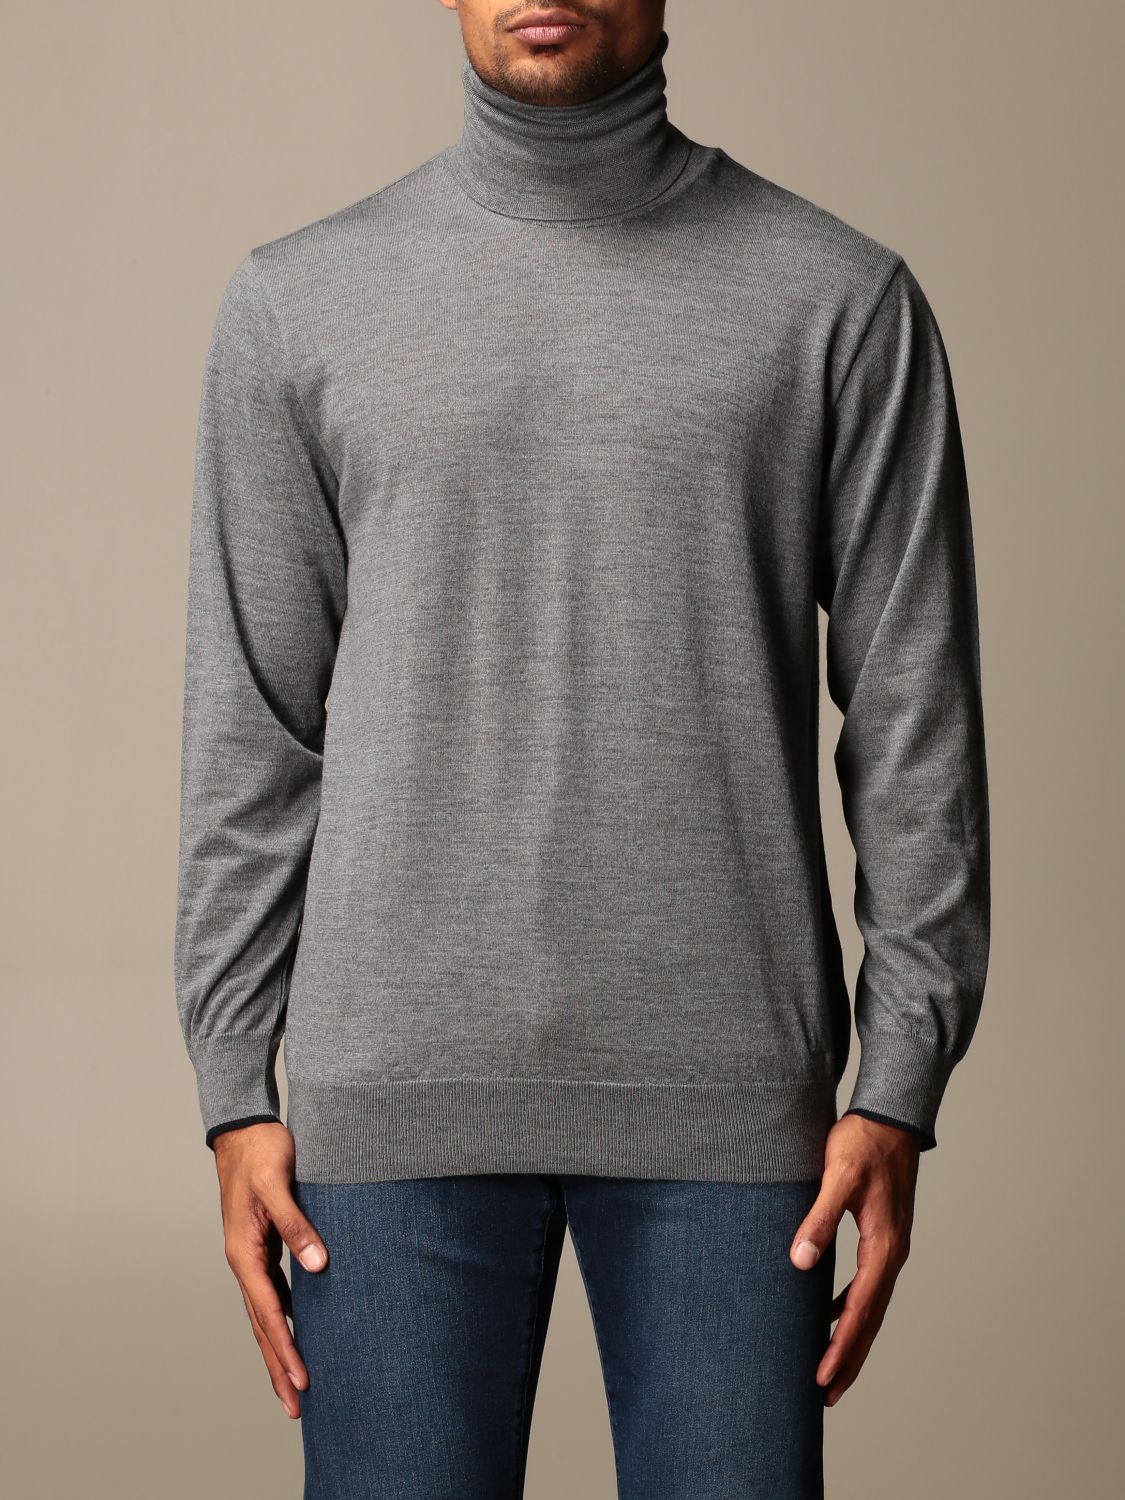 PAUL & SHARK: wool turtleneck - Grey | Paul & Shark sweater A18P1509 ...